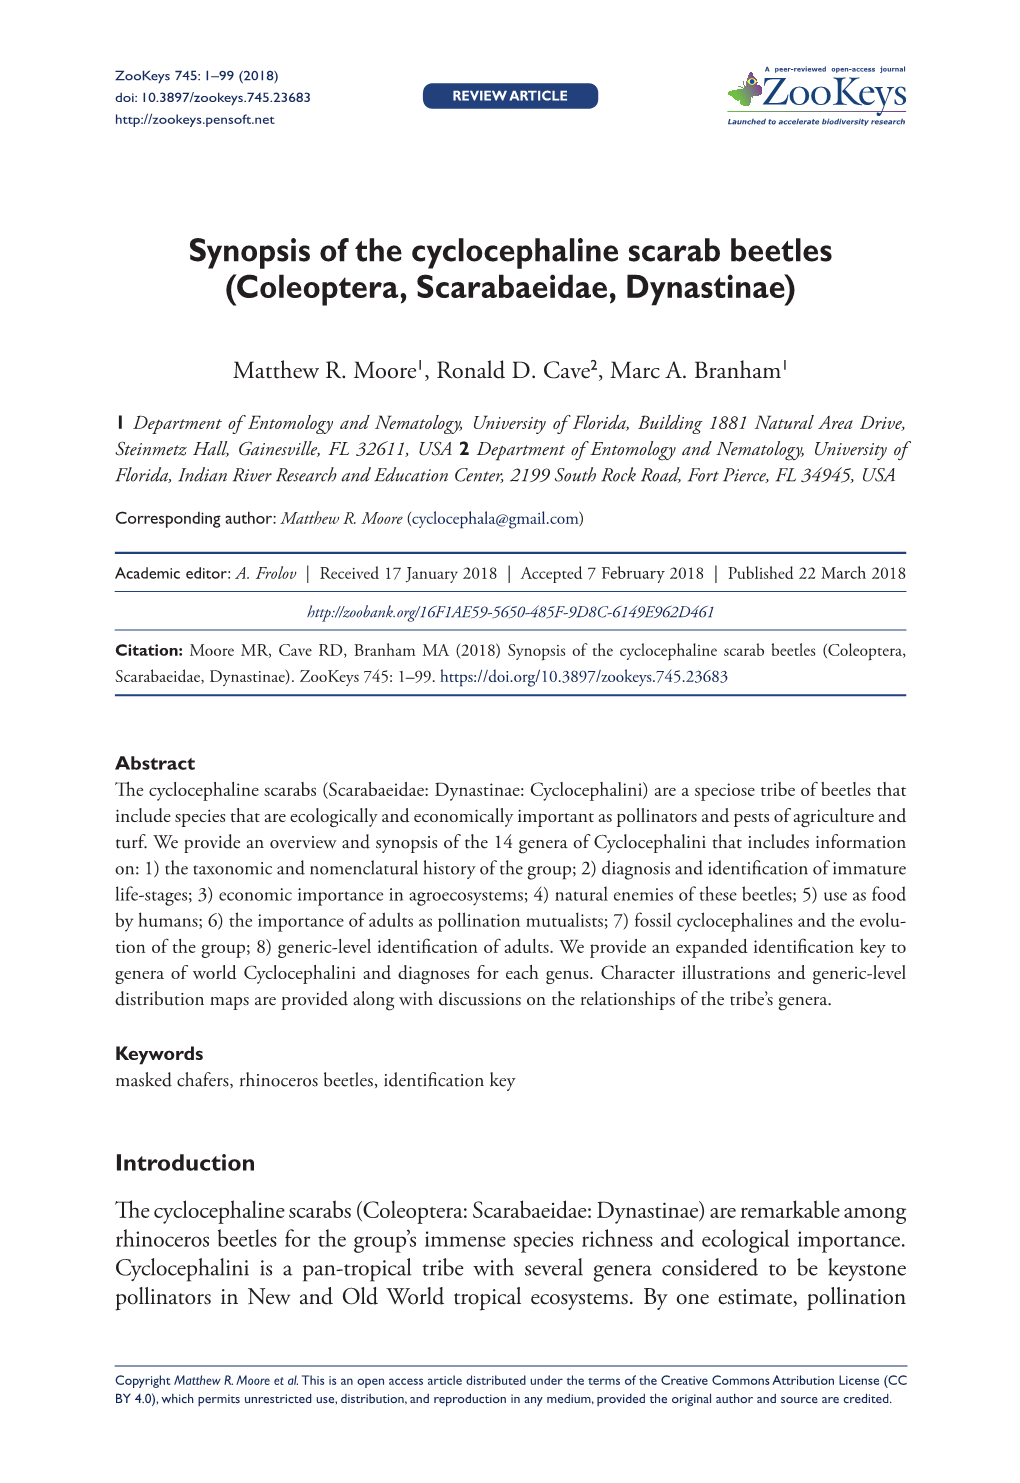 Synopsis of the Cyclocephaline Scarab Beetles (Coleoptera, Scarabaeidae, Dynastinae)